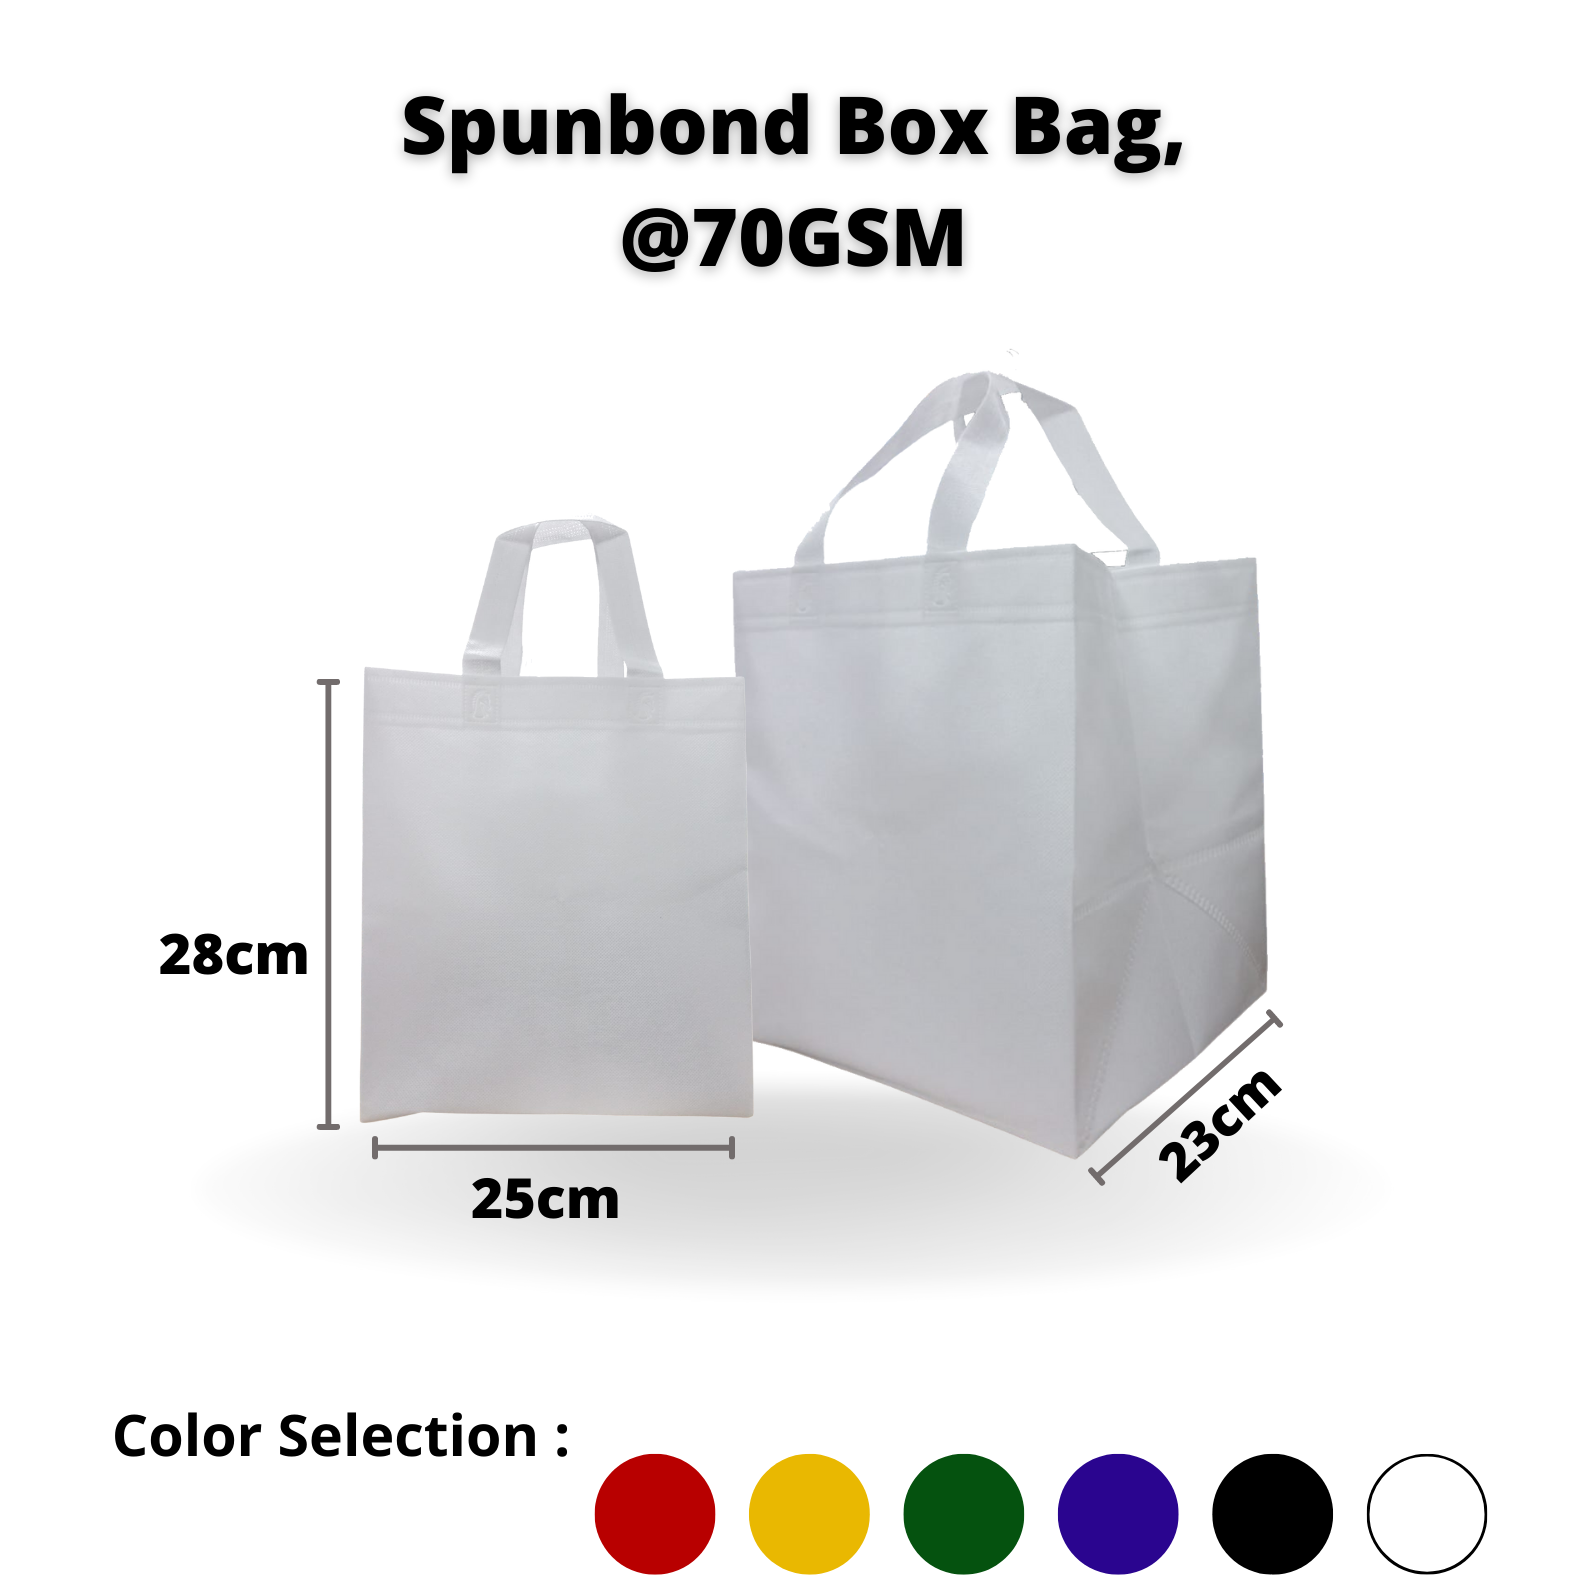 Spunbond Box Bag 25